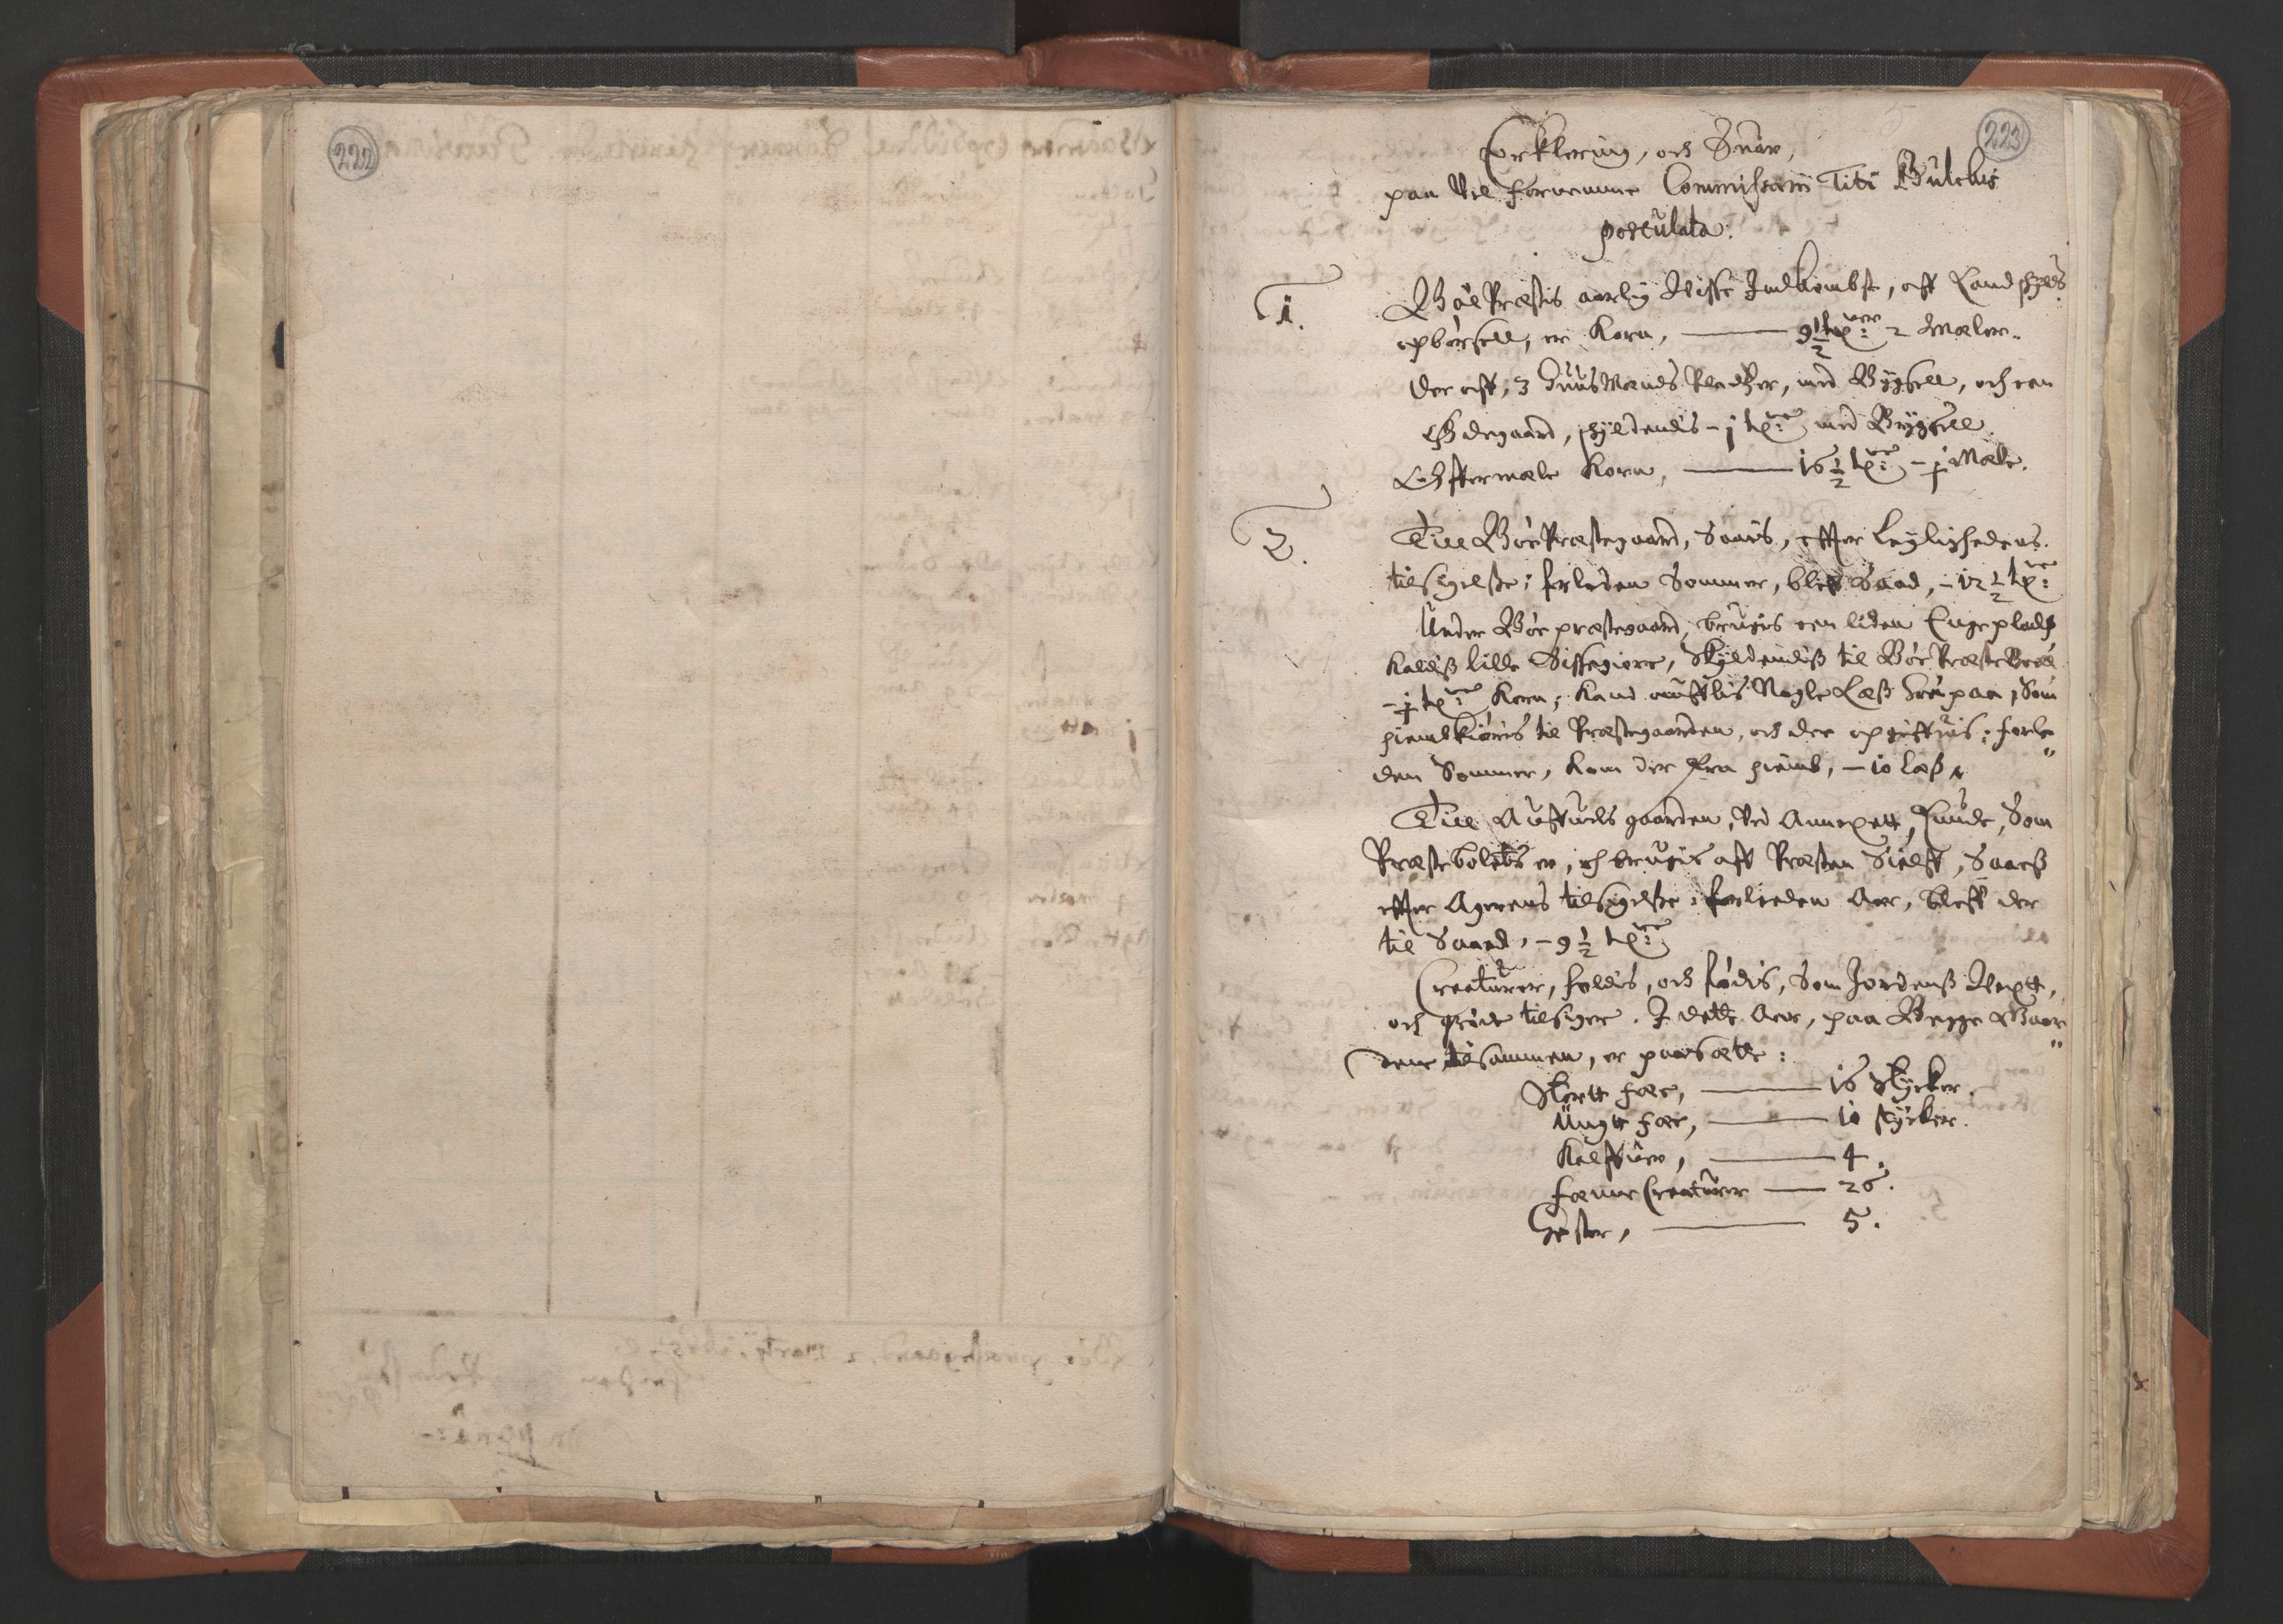 RA, Vicar's Census 1664-1666, no. 12: Øvre Telemark deanery, Nedre Telemark deanery and Bamble deanery, 1664-1666, p. 222-223